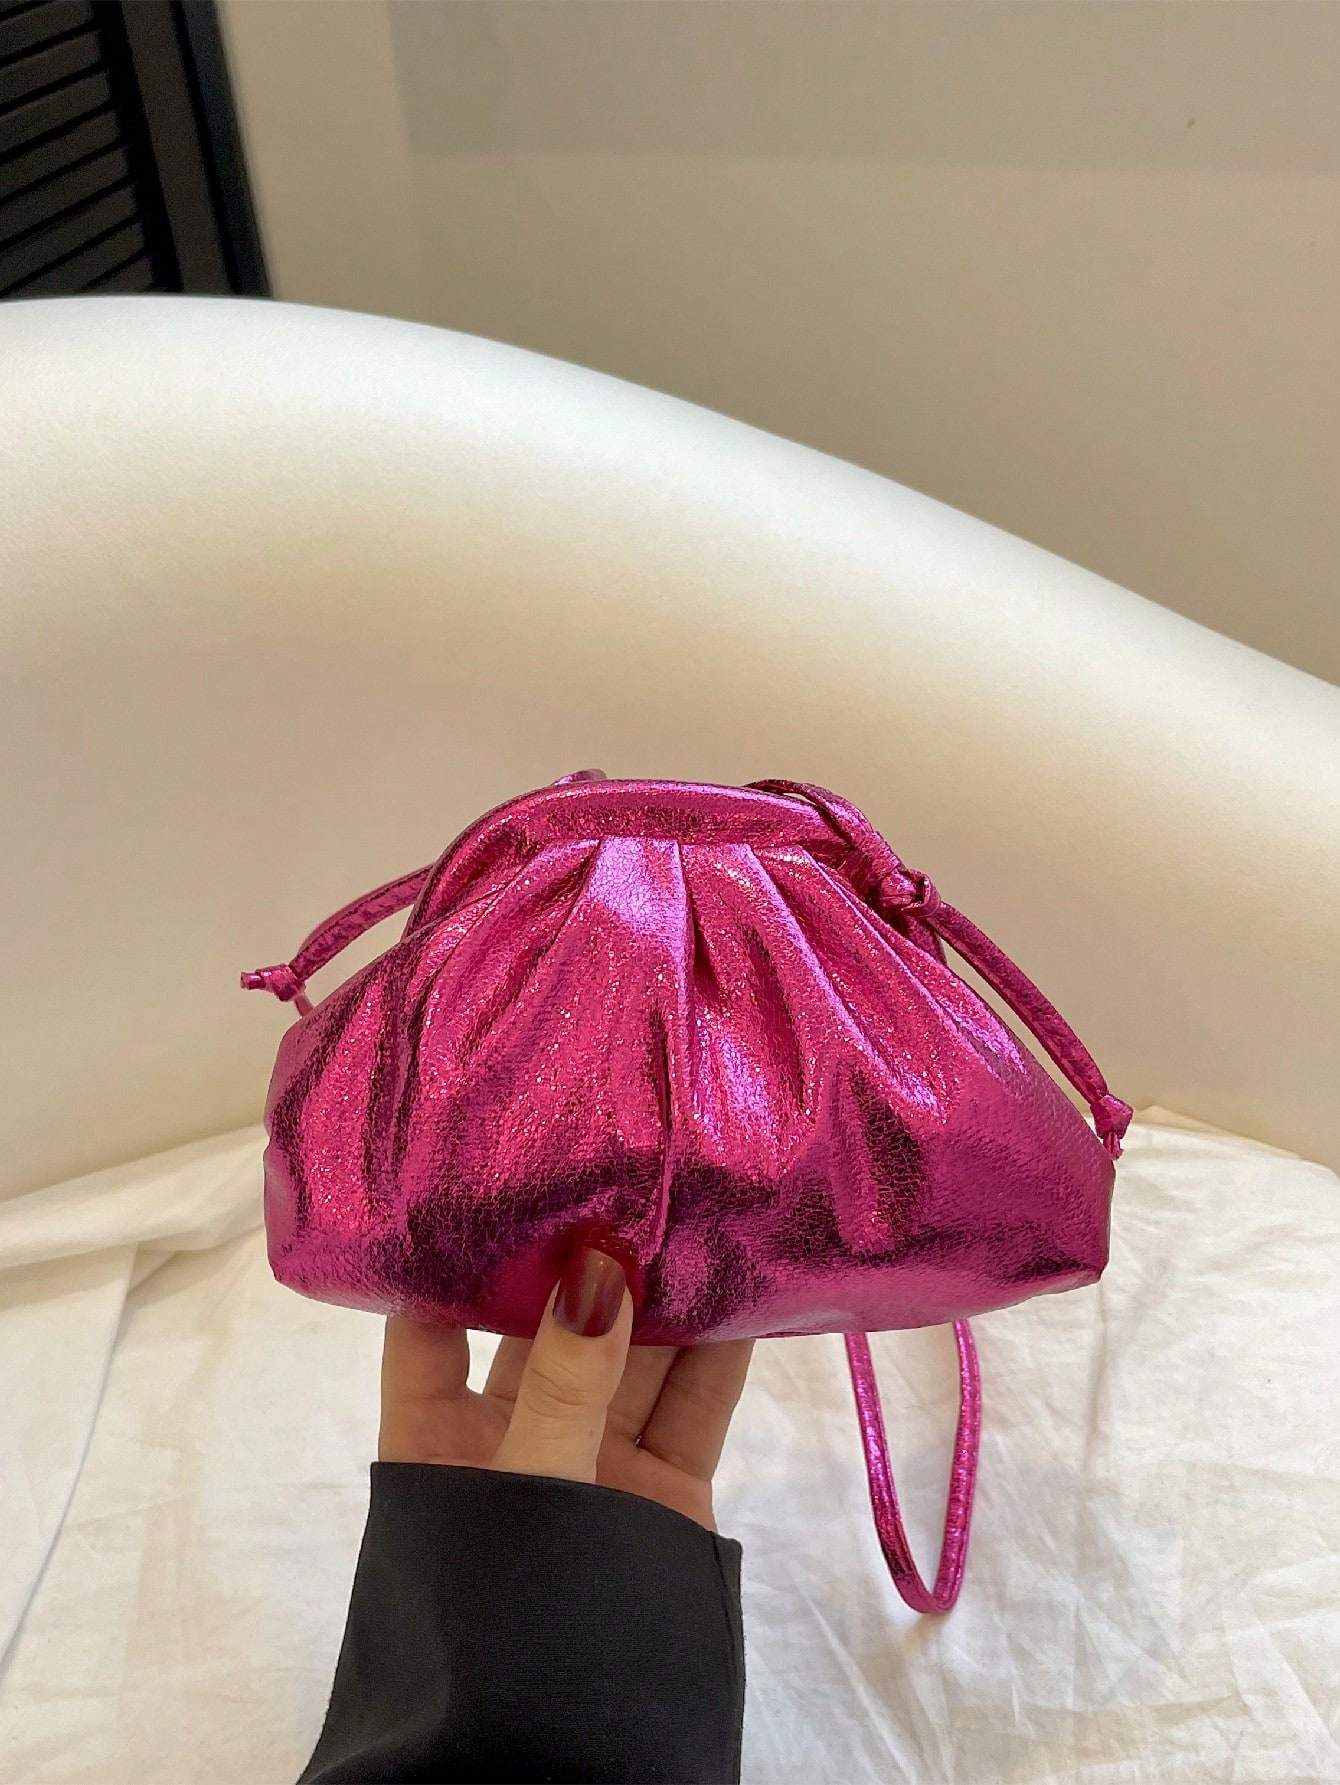 Мини-сумка со складками Ярко-розовый металлик Полиуретан в стиле фанк, ярко-розовый